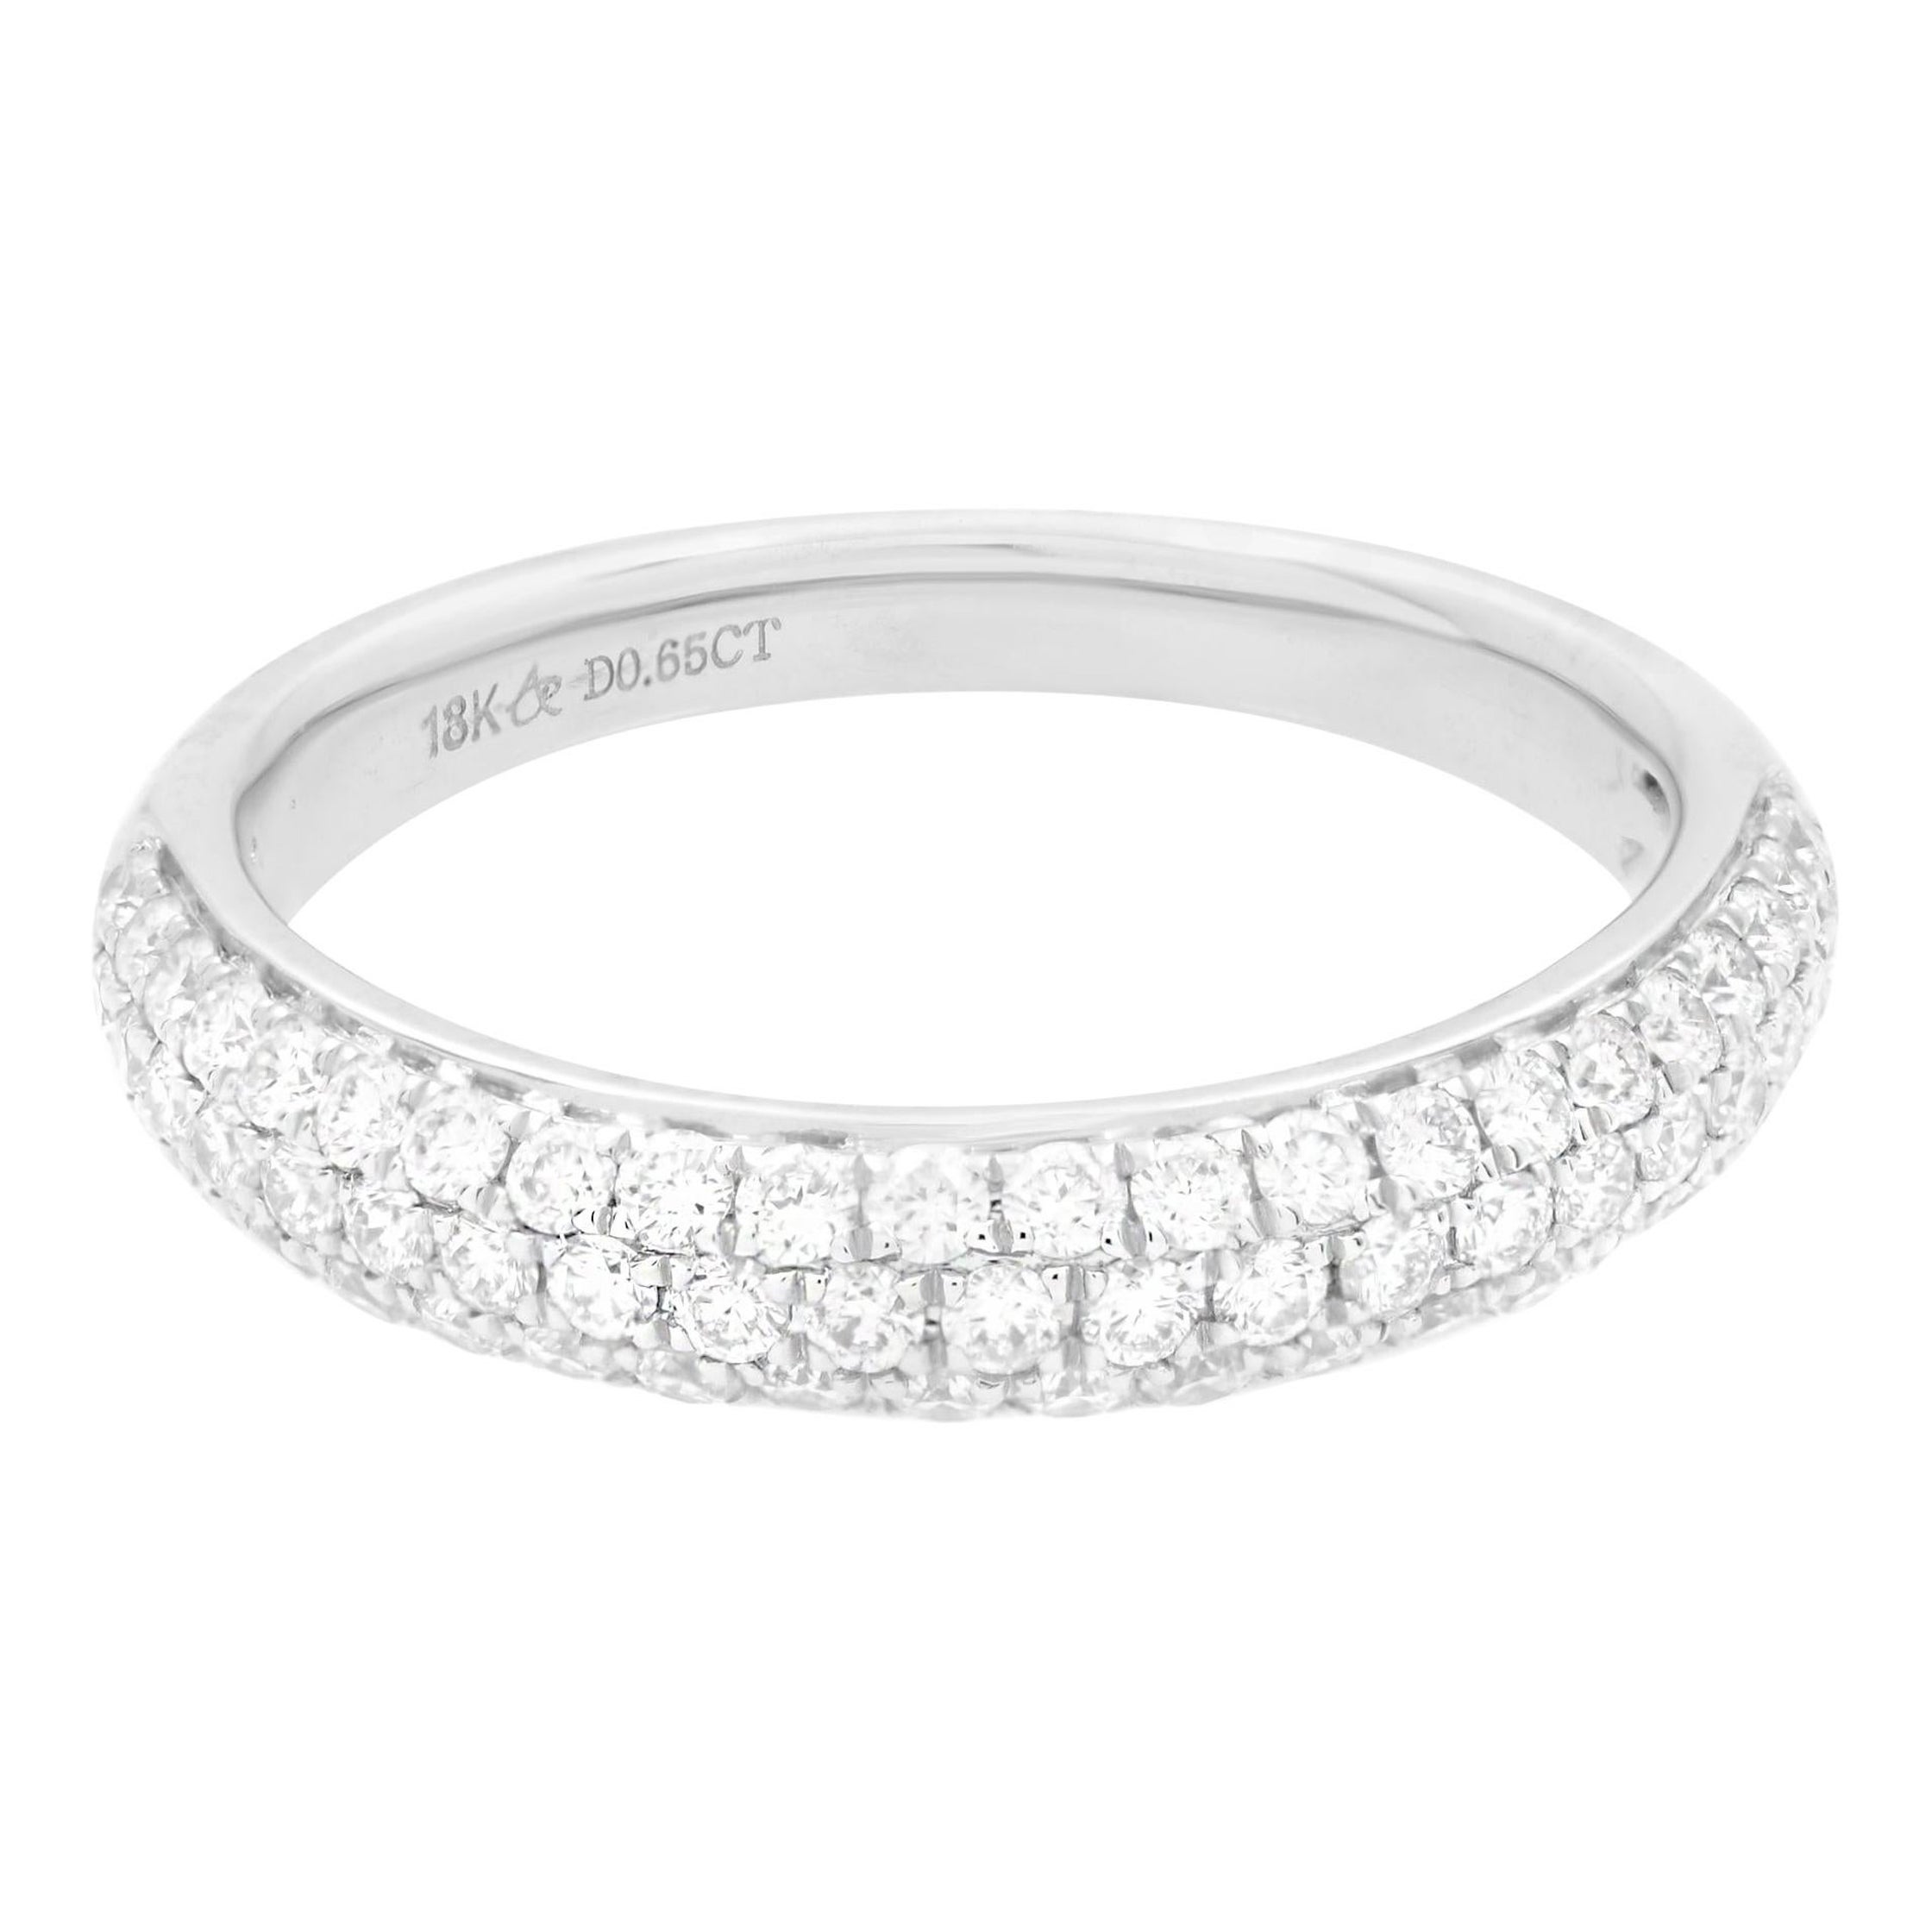 Rachel Koen Pave Diamond Wedding Band Ring 18K White Gold 0.65 Cttw